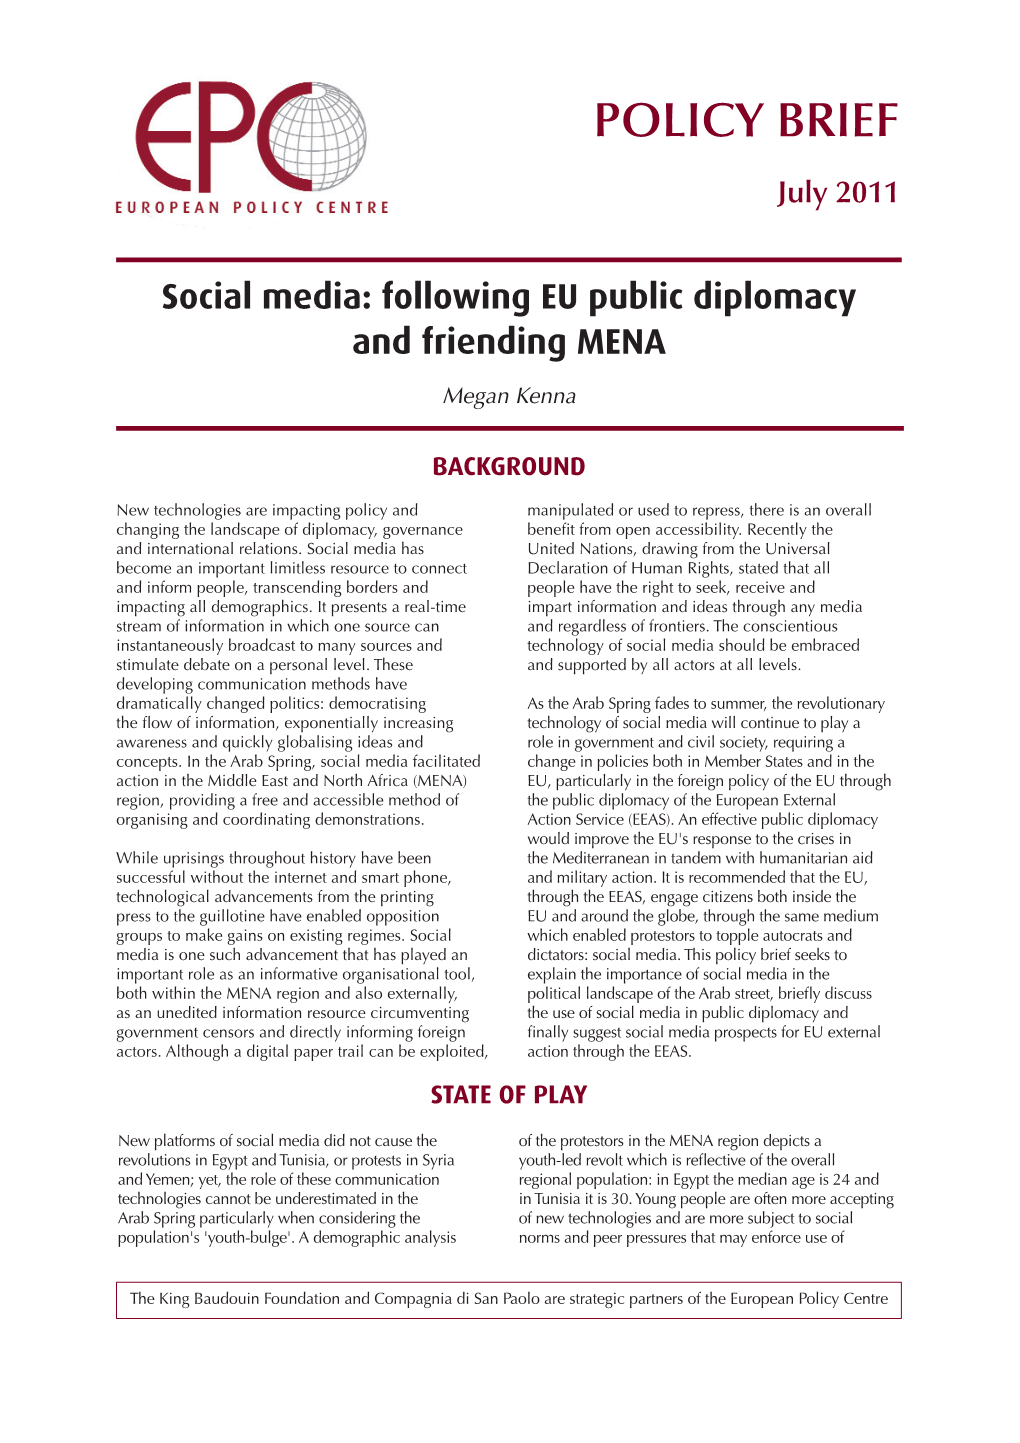 Social Media: Following EU Public Diplomacy and Friending MENA